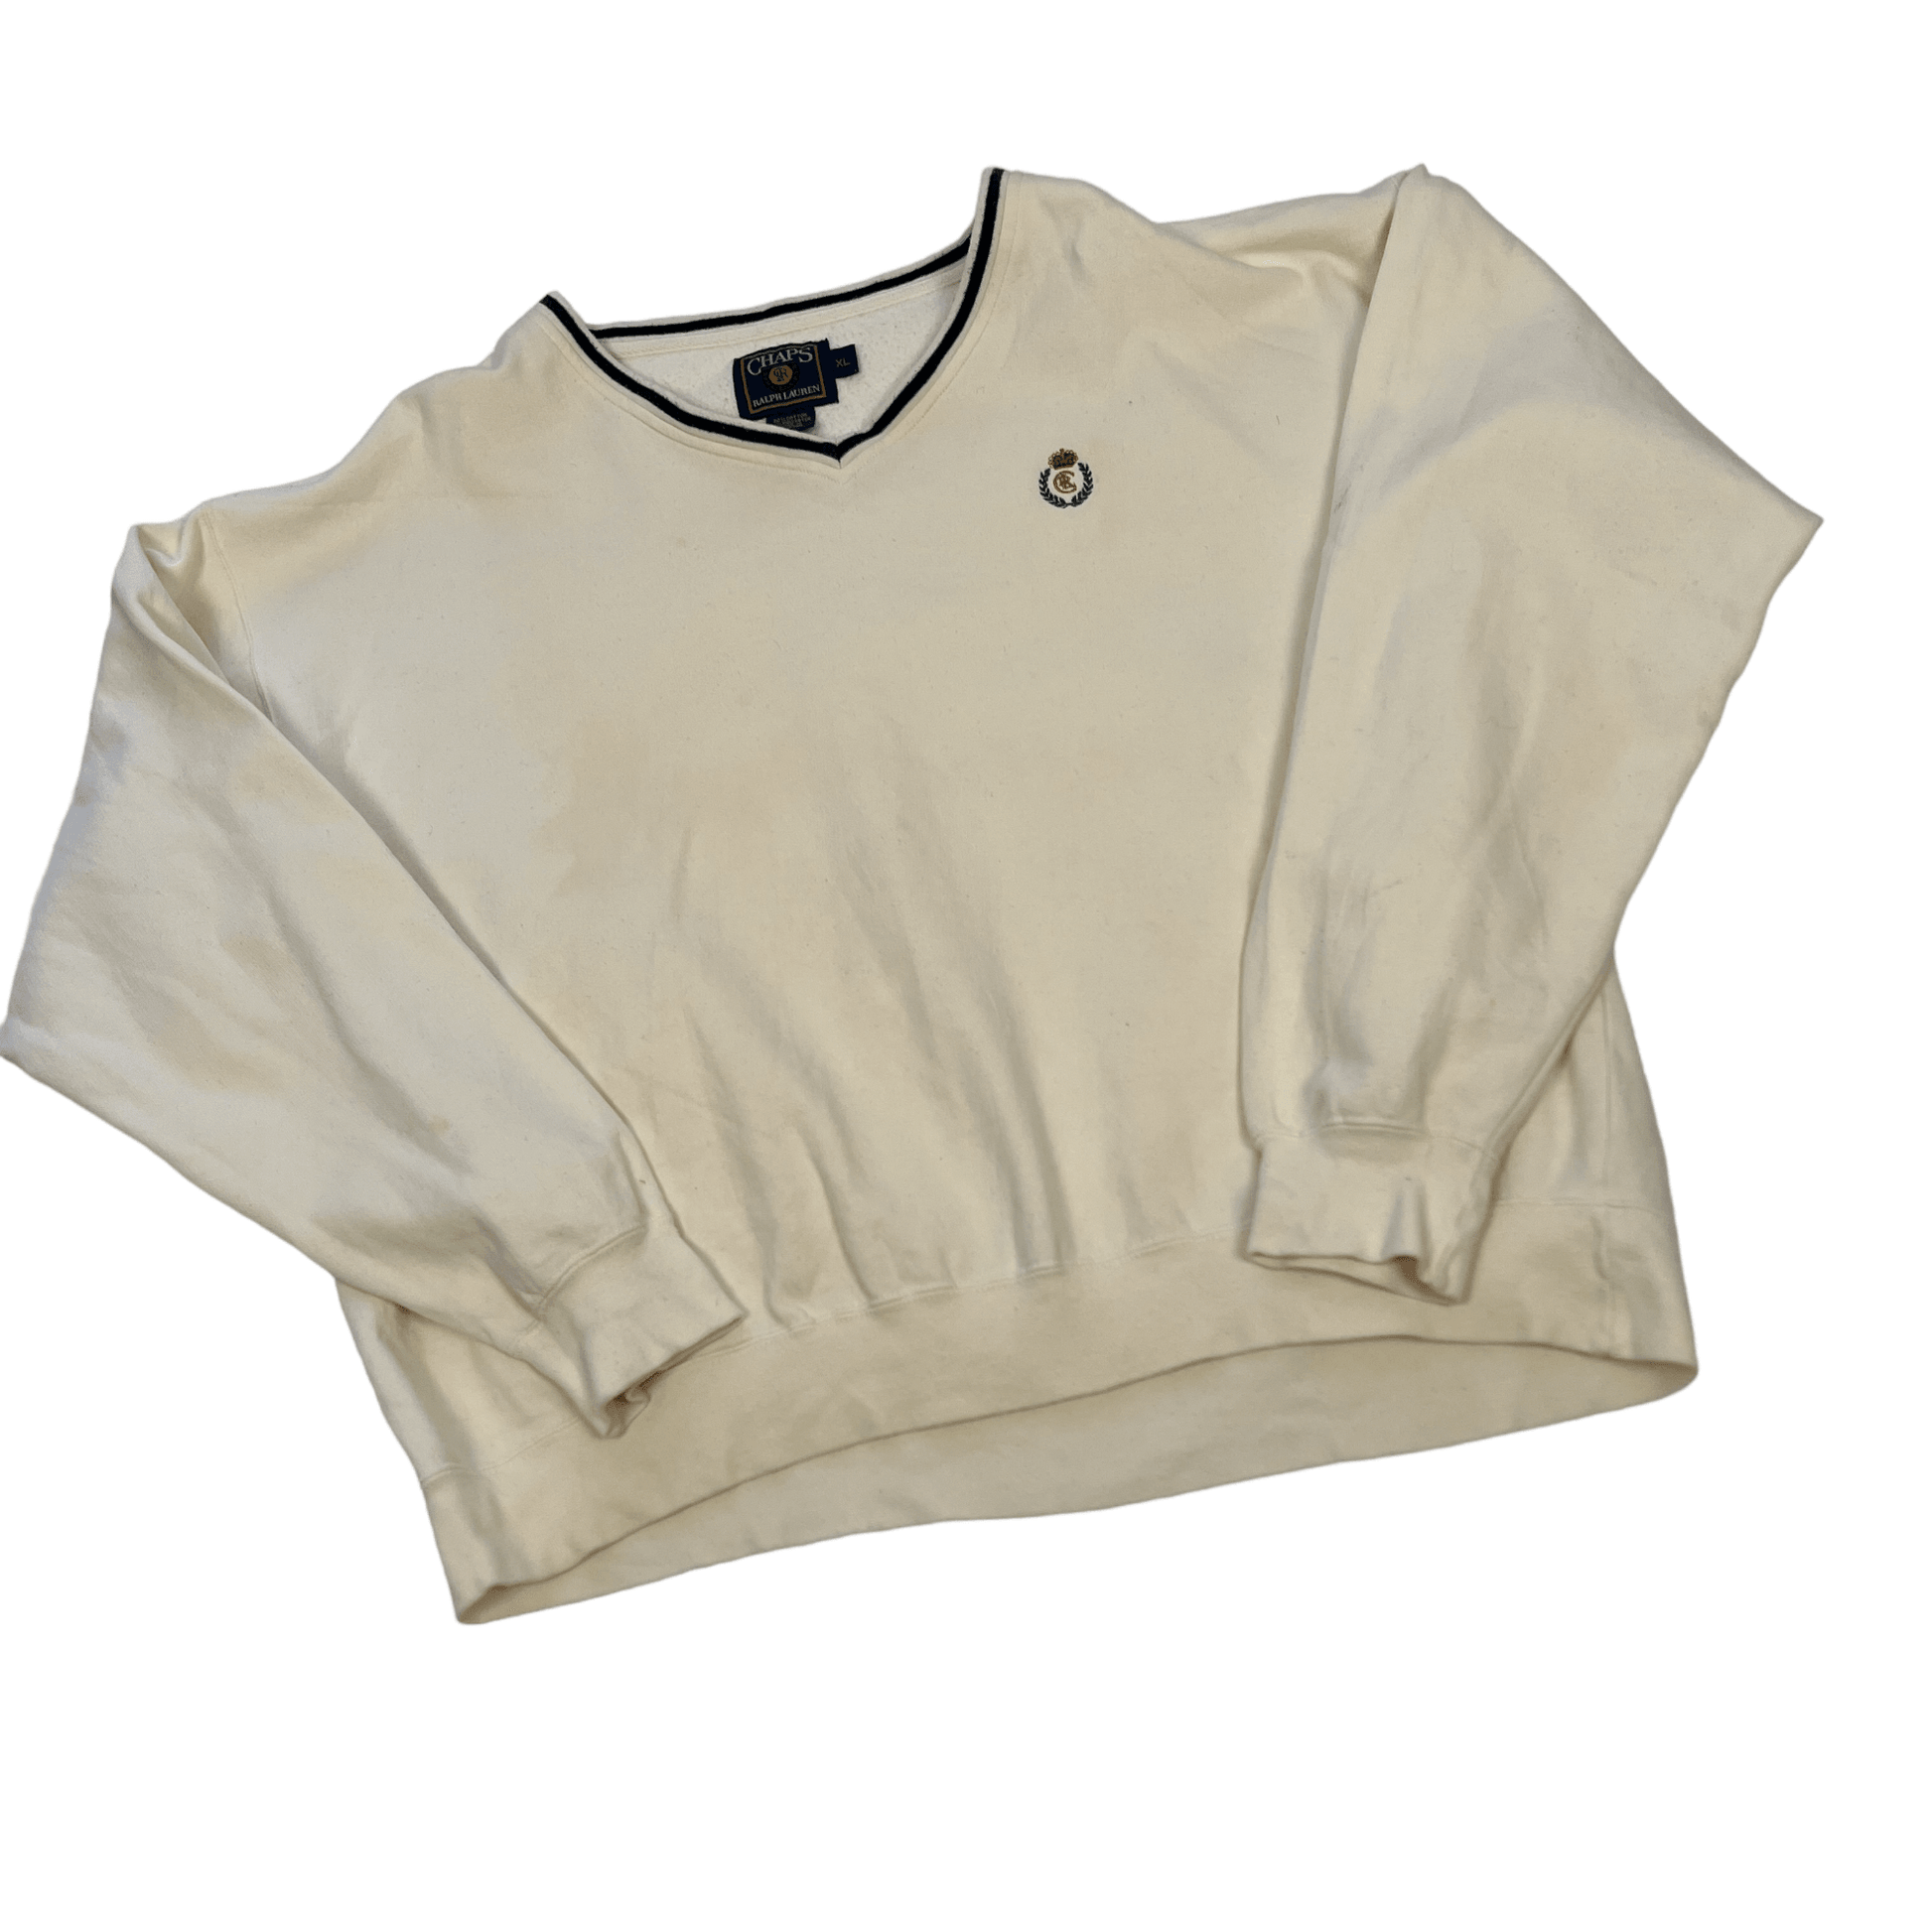 Vintage 90s White Chaps Sweatshirt - Extra Large - The Streetwear Studio